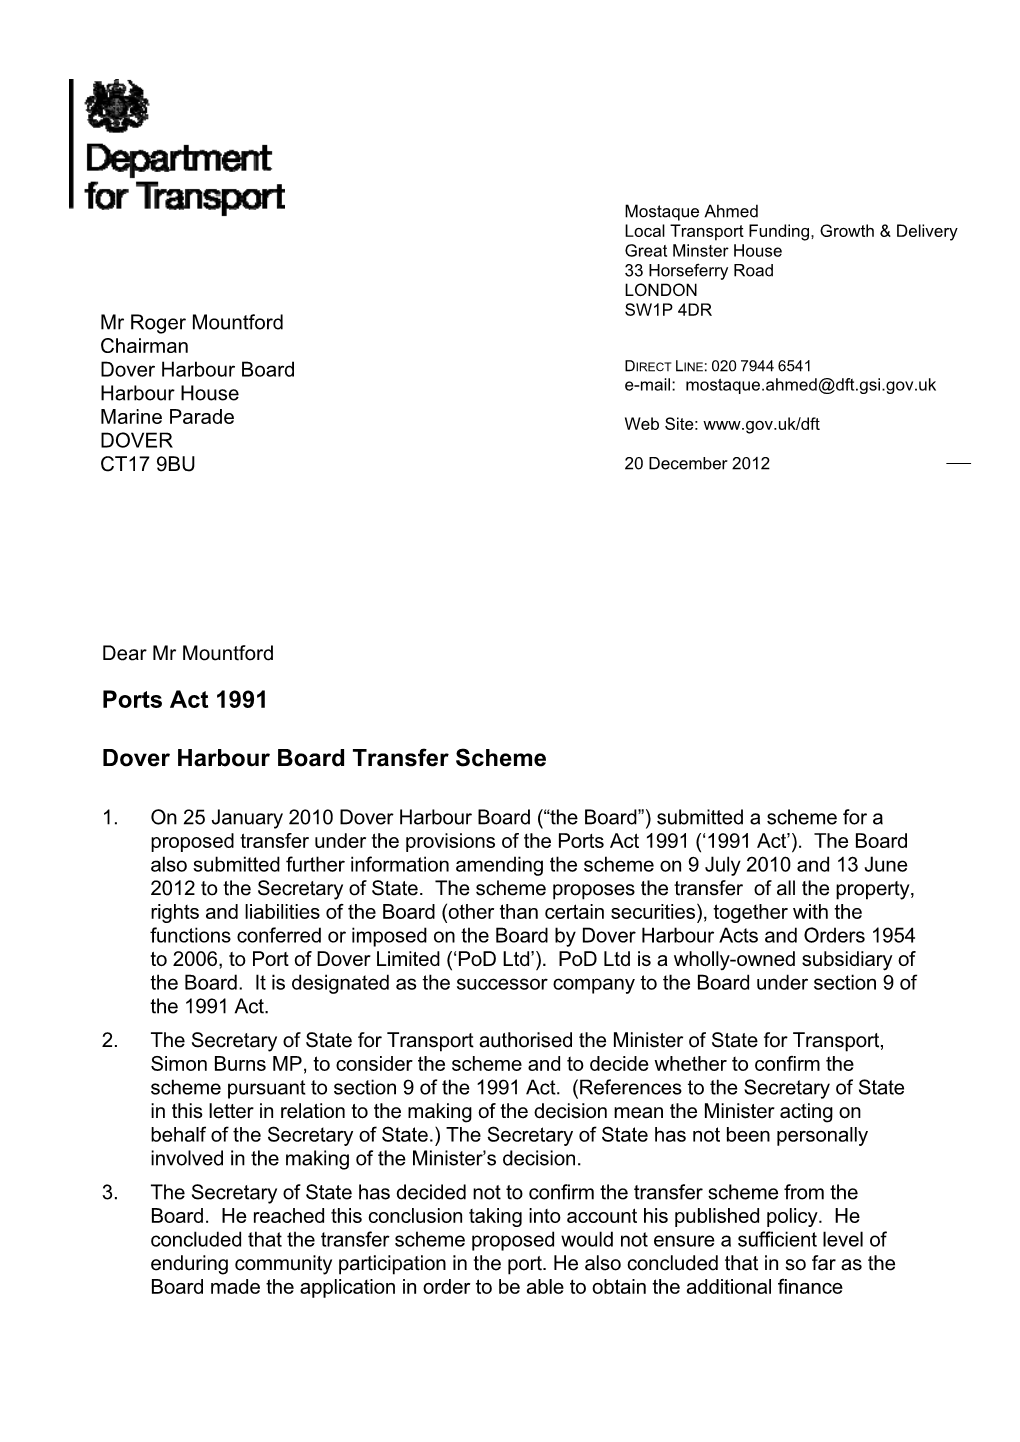 Dover Harbour Board Transfer Scheme Decision Letter